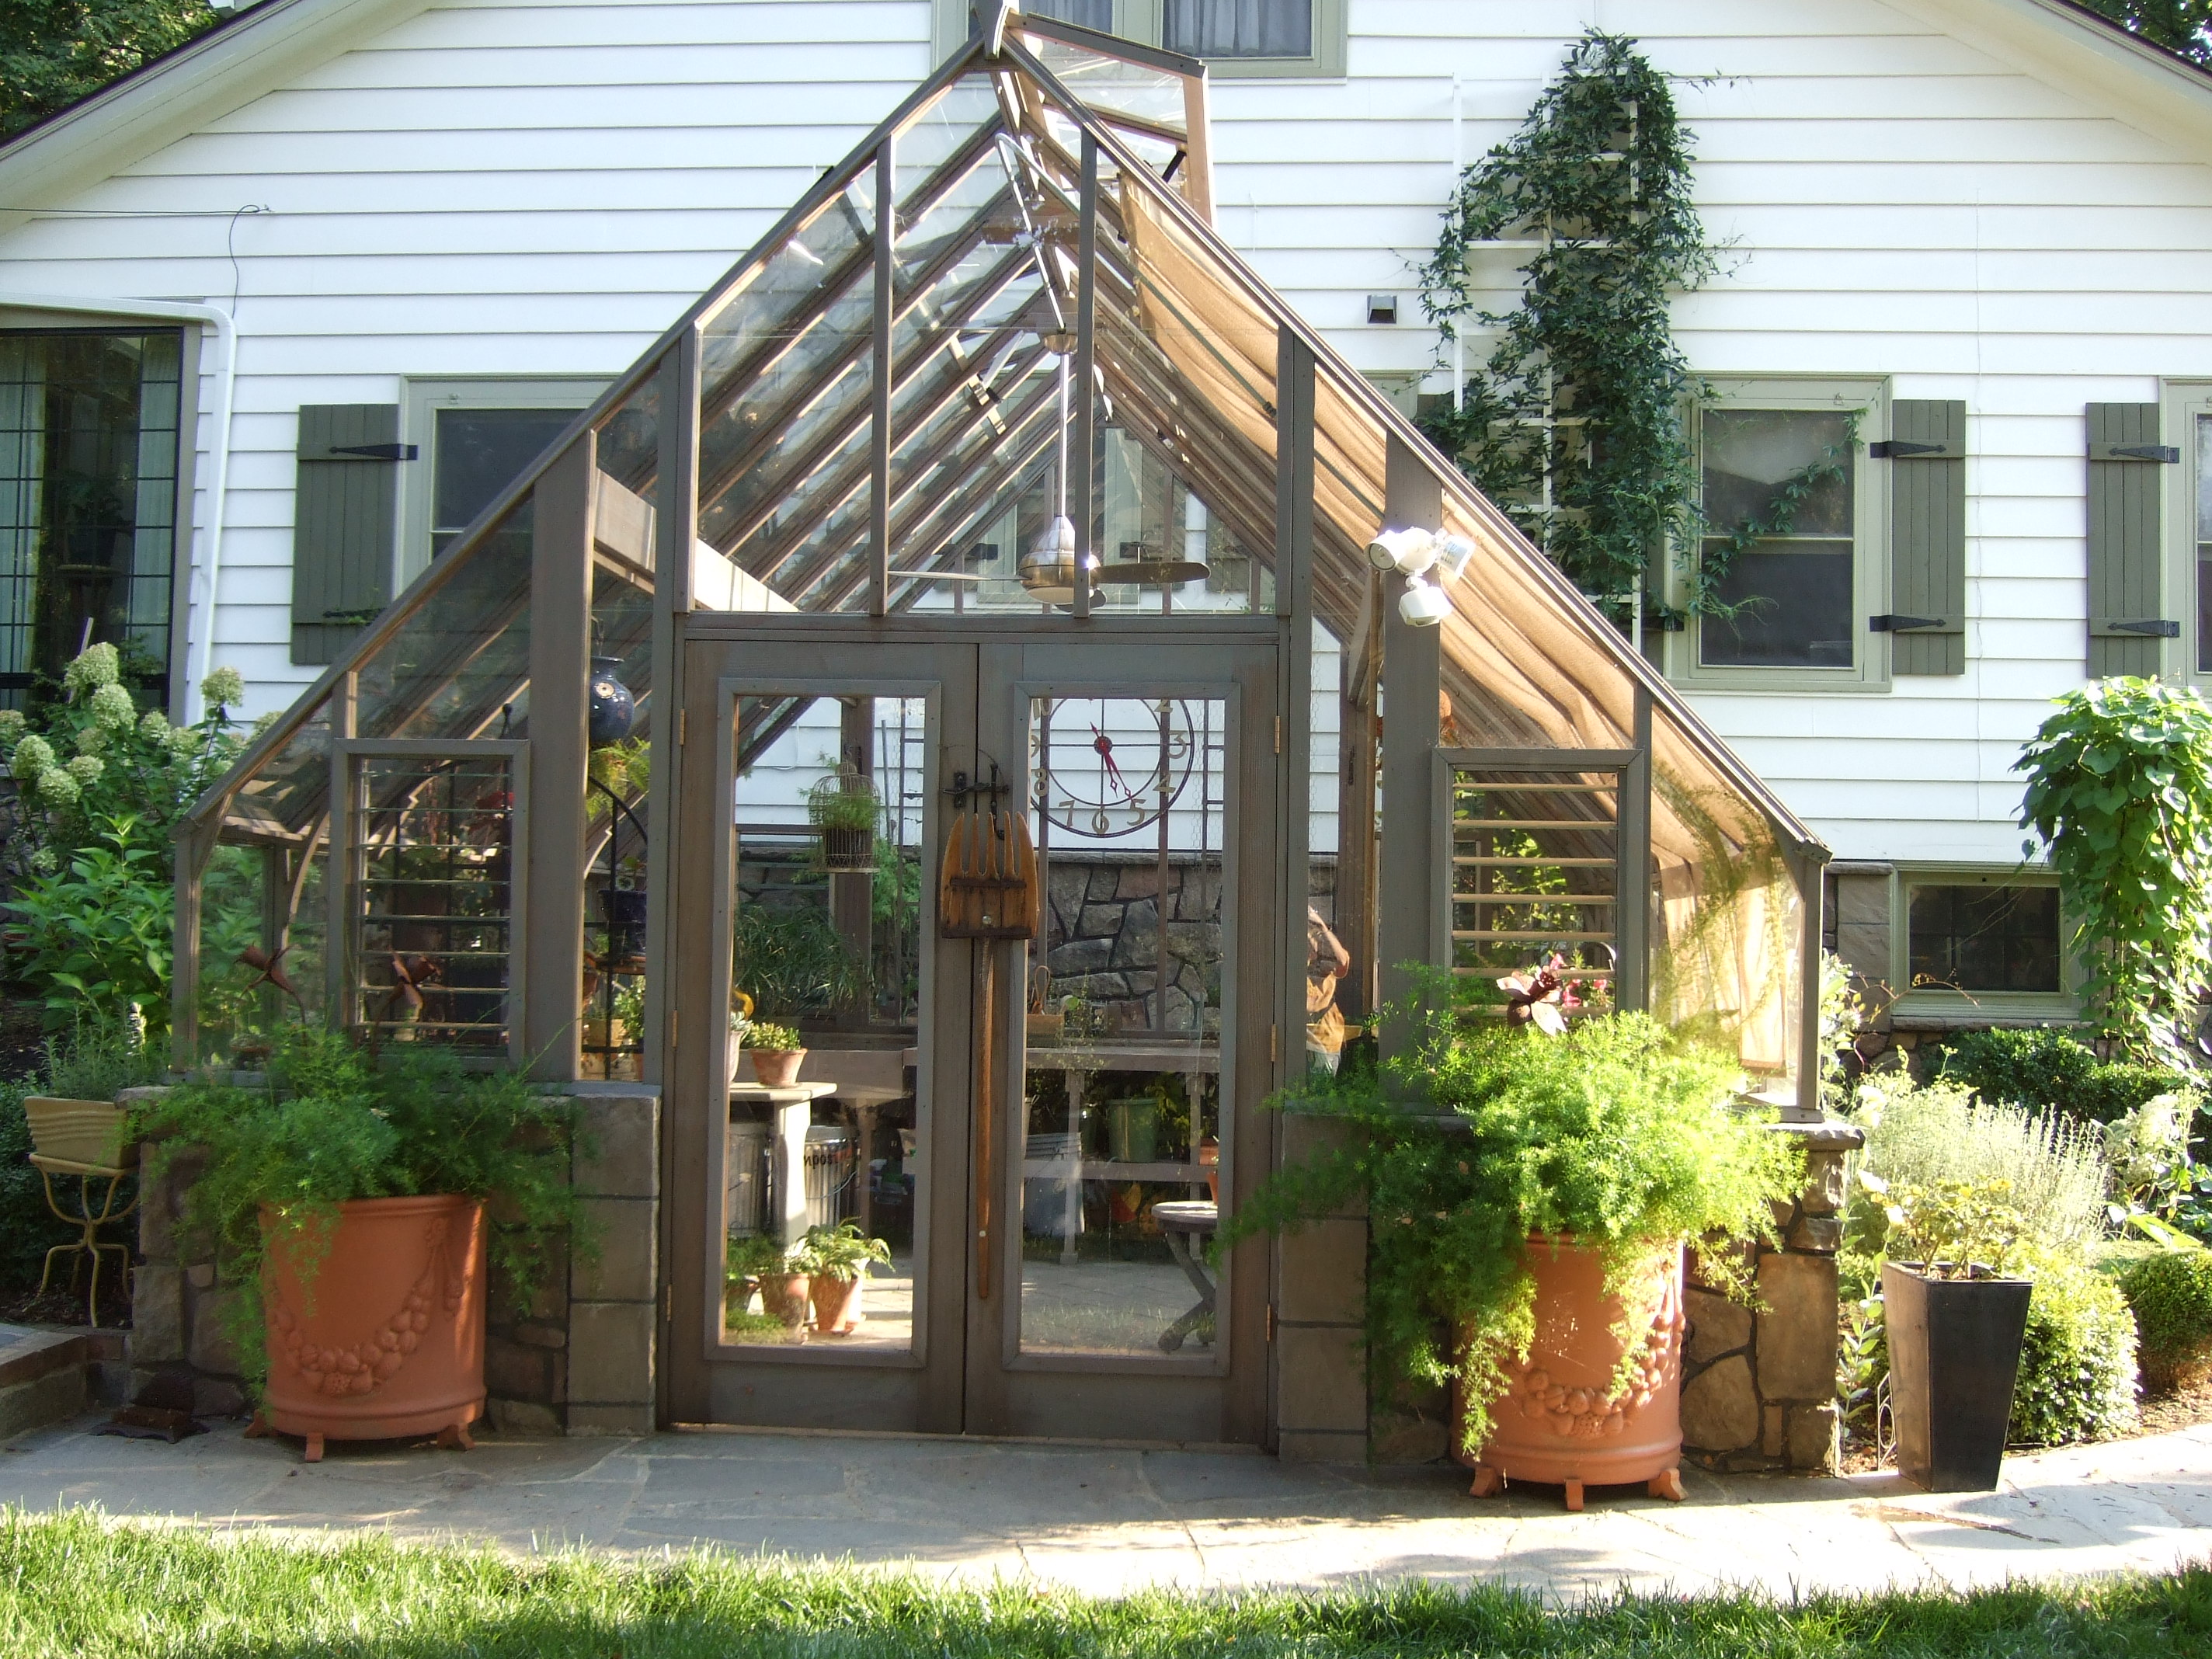 Tudor Greenhouse Pictures - Sturdi-Built Greenhouses